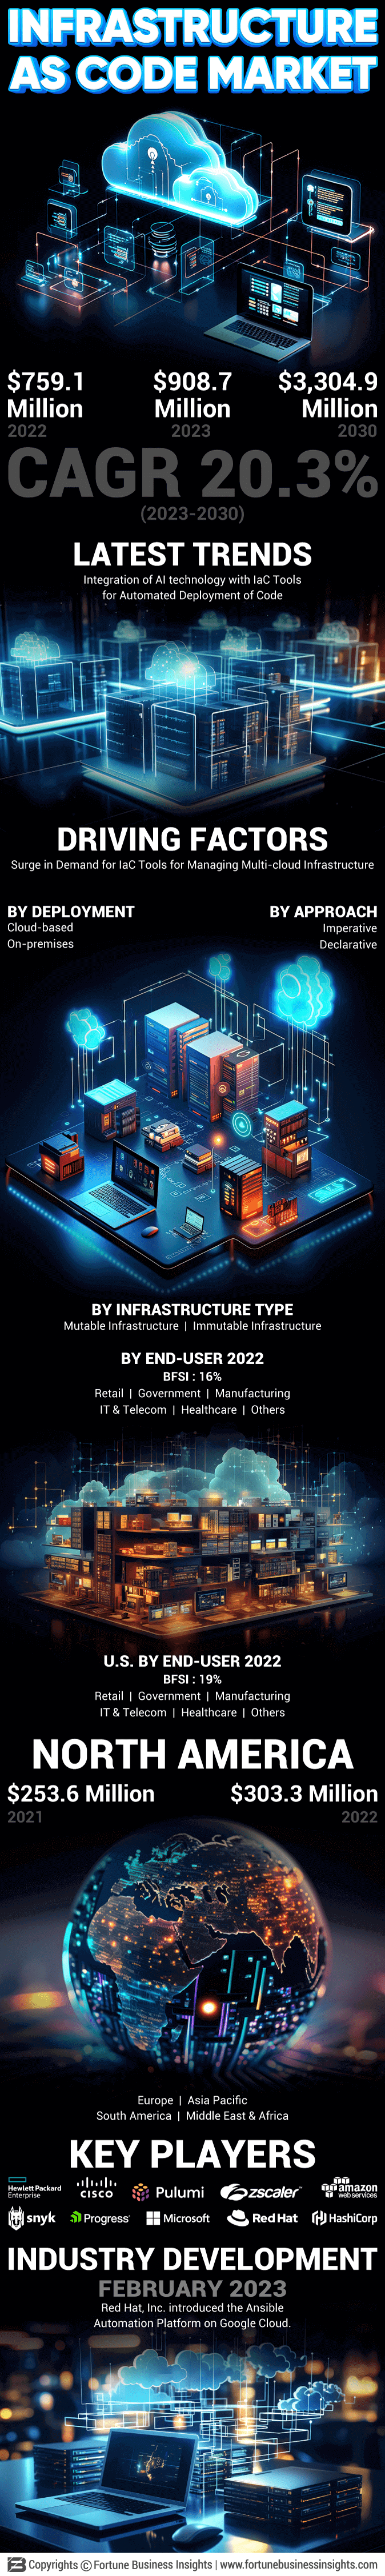 Infrastructure as Code Market